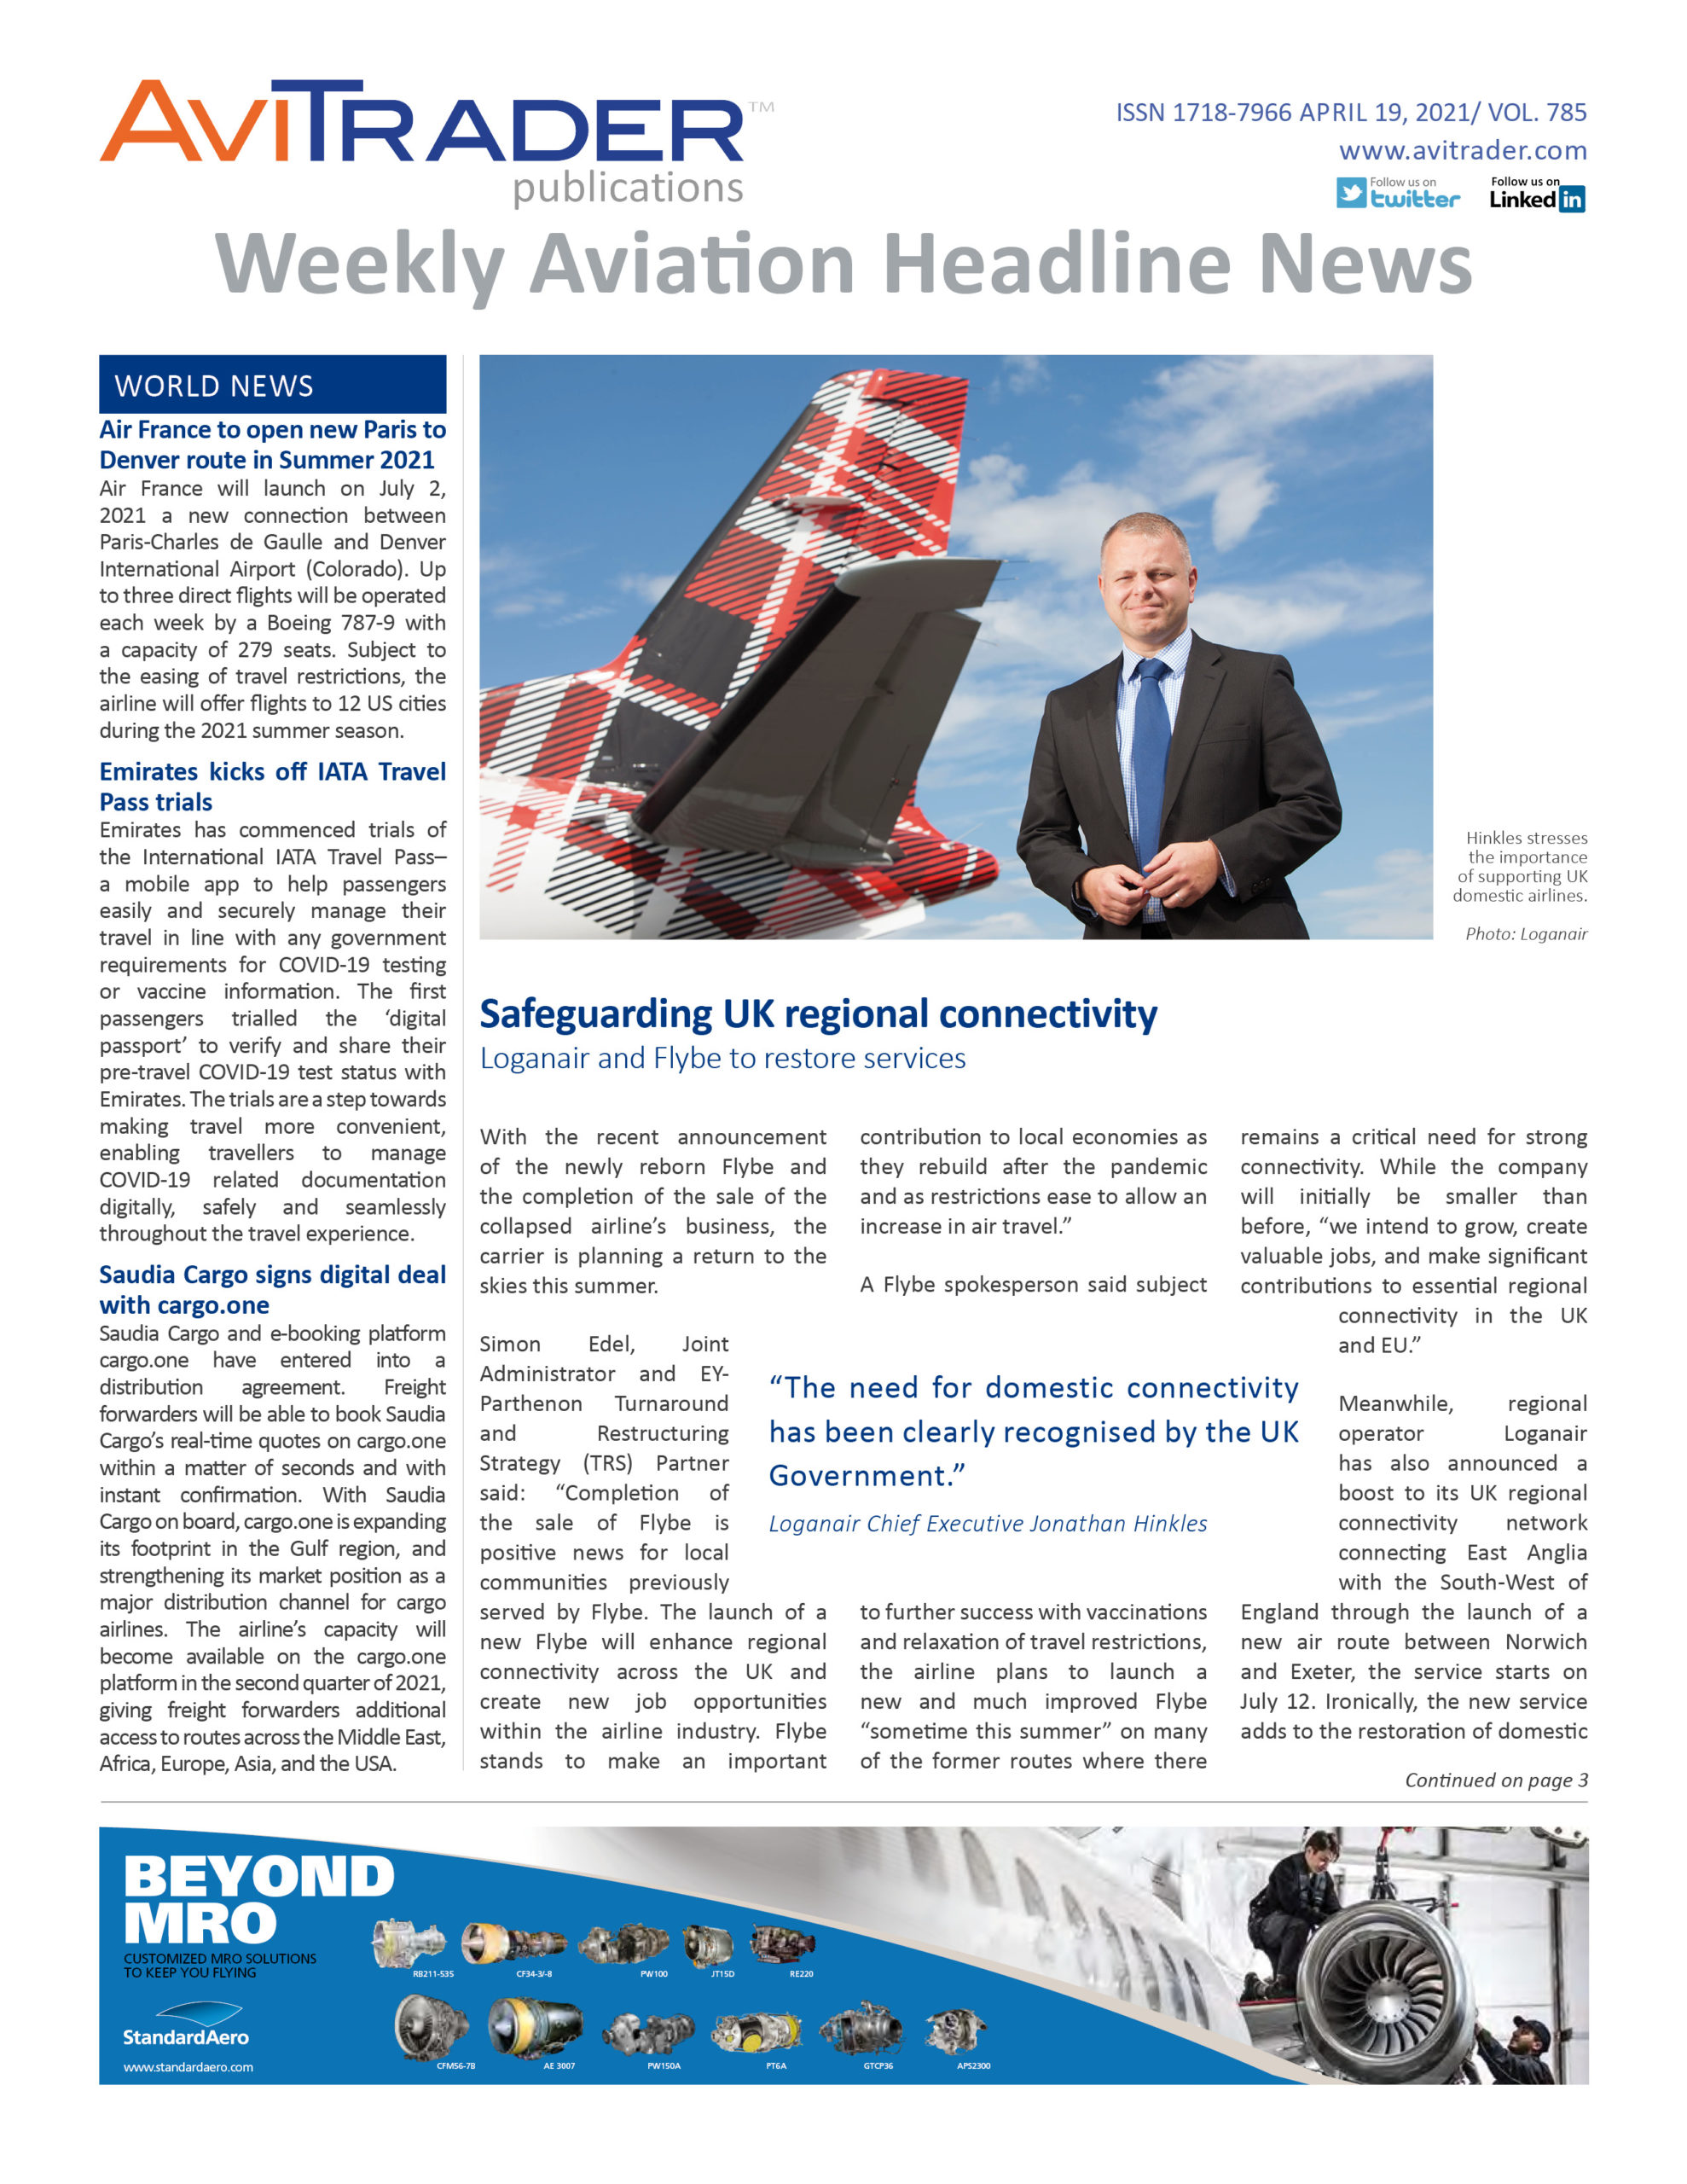 AviTrader_Weekly_Headline_News_Cover_2021-04-19